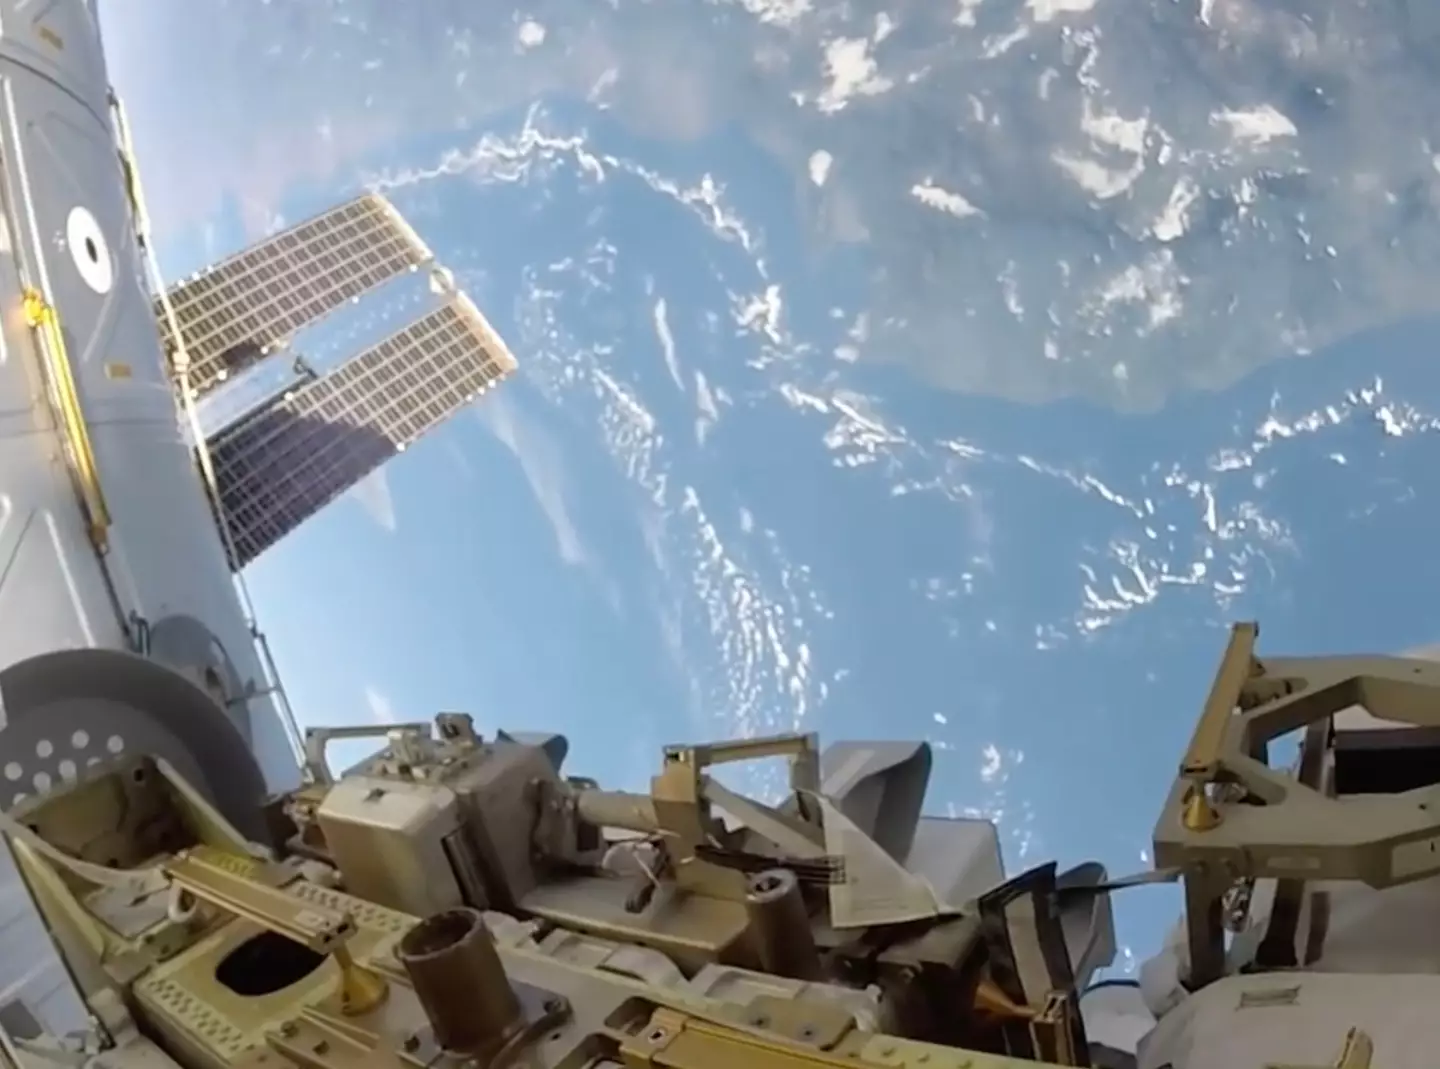 Randy Bresnik filmed incredible footage from space.